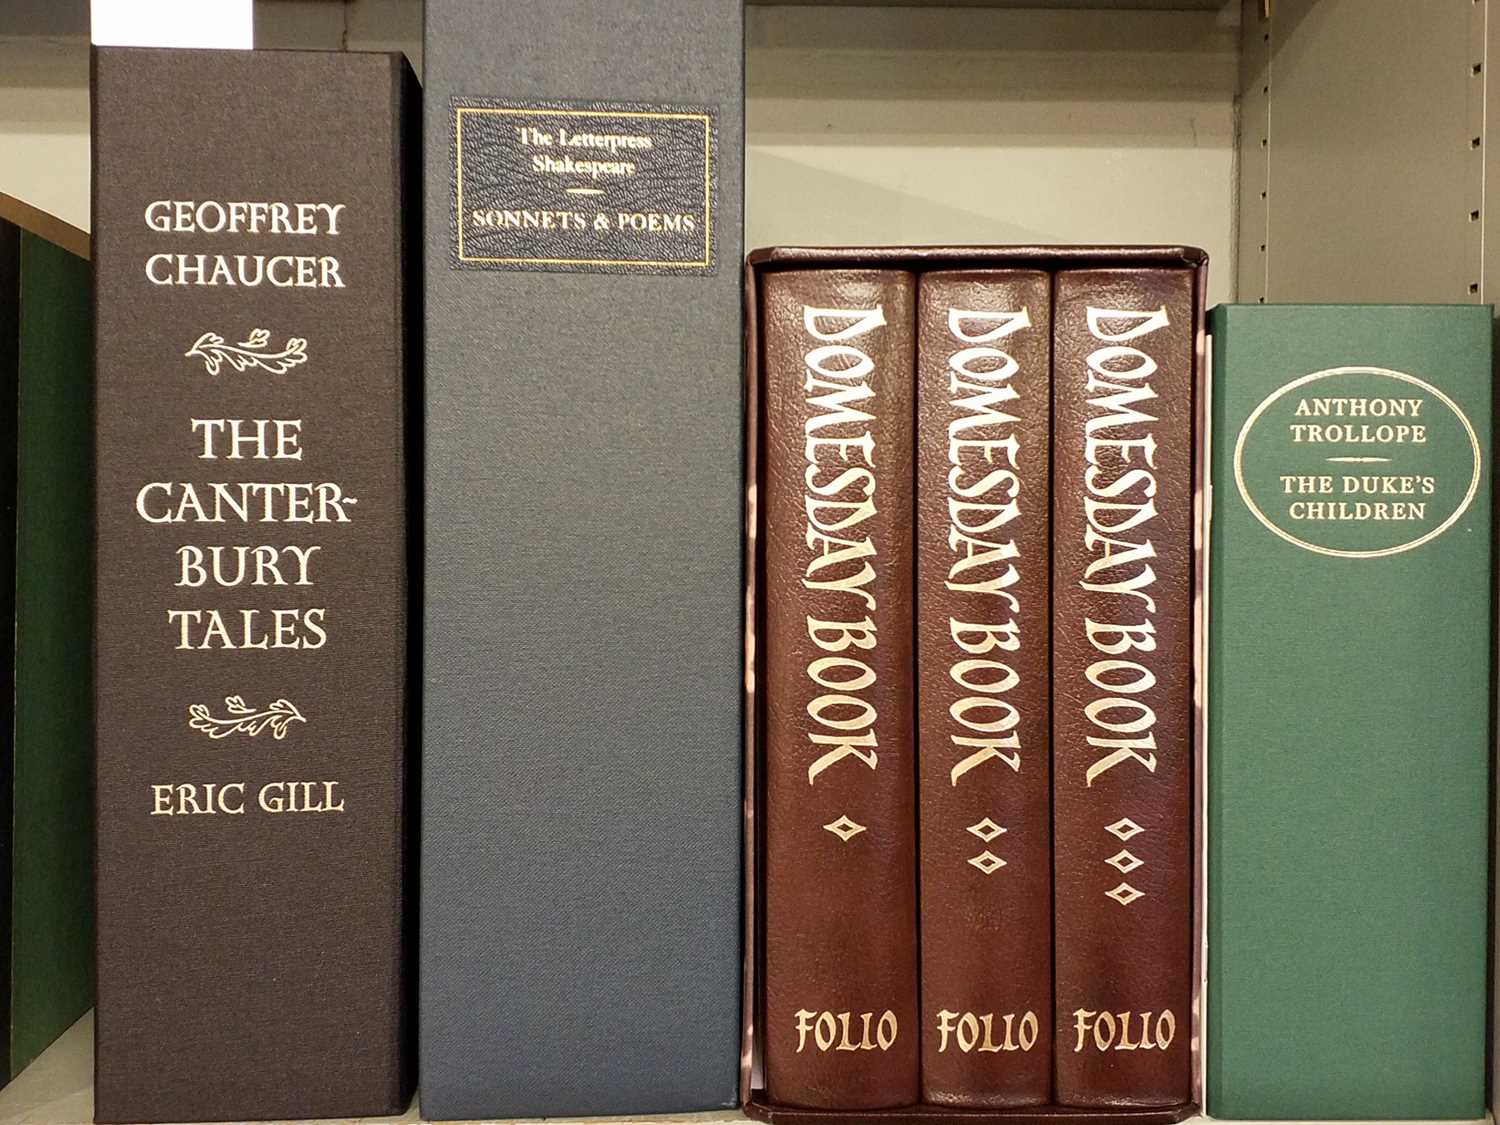 Lot 680 - Folio Society. The Canterbury Tales, 2010